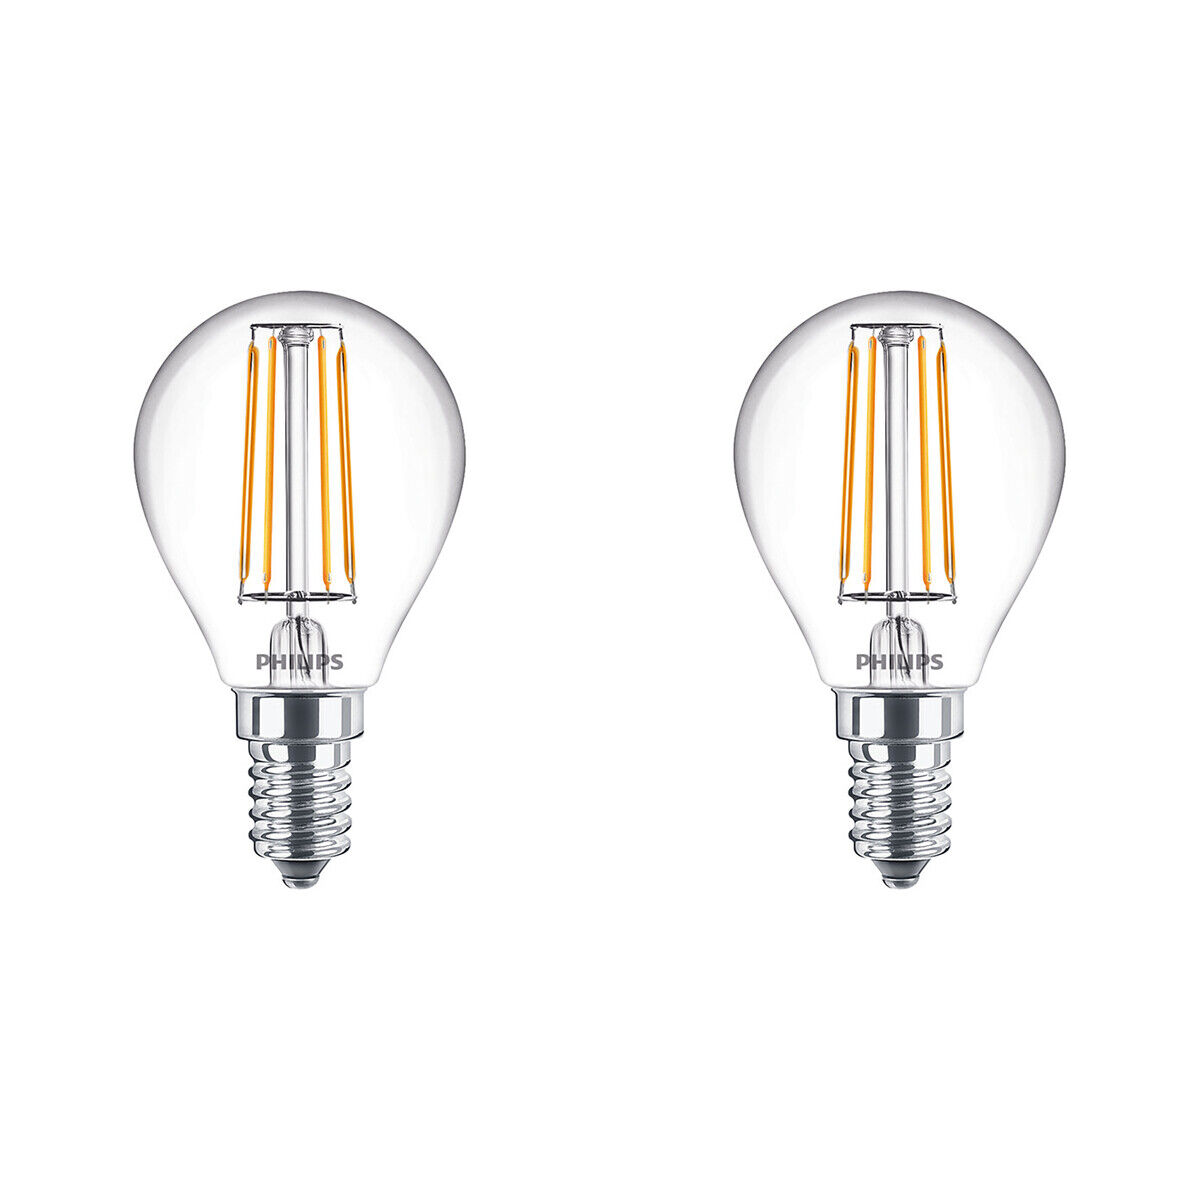 PHILIPS - LED Lamp Filament - Set 2 Stuks - Classic Lustre 827 P45 CL - E14 Fitting - 4.3W - Warm Wit 2700K   Vervangt 40W